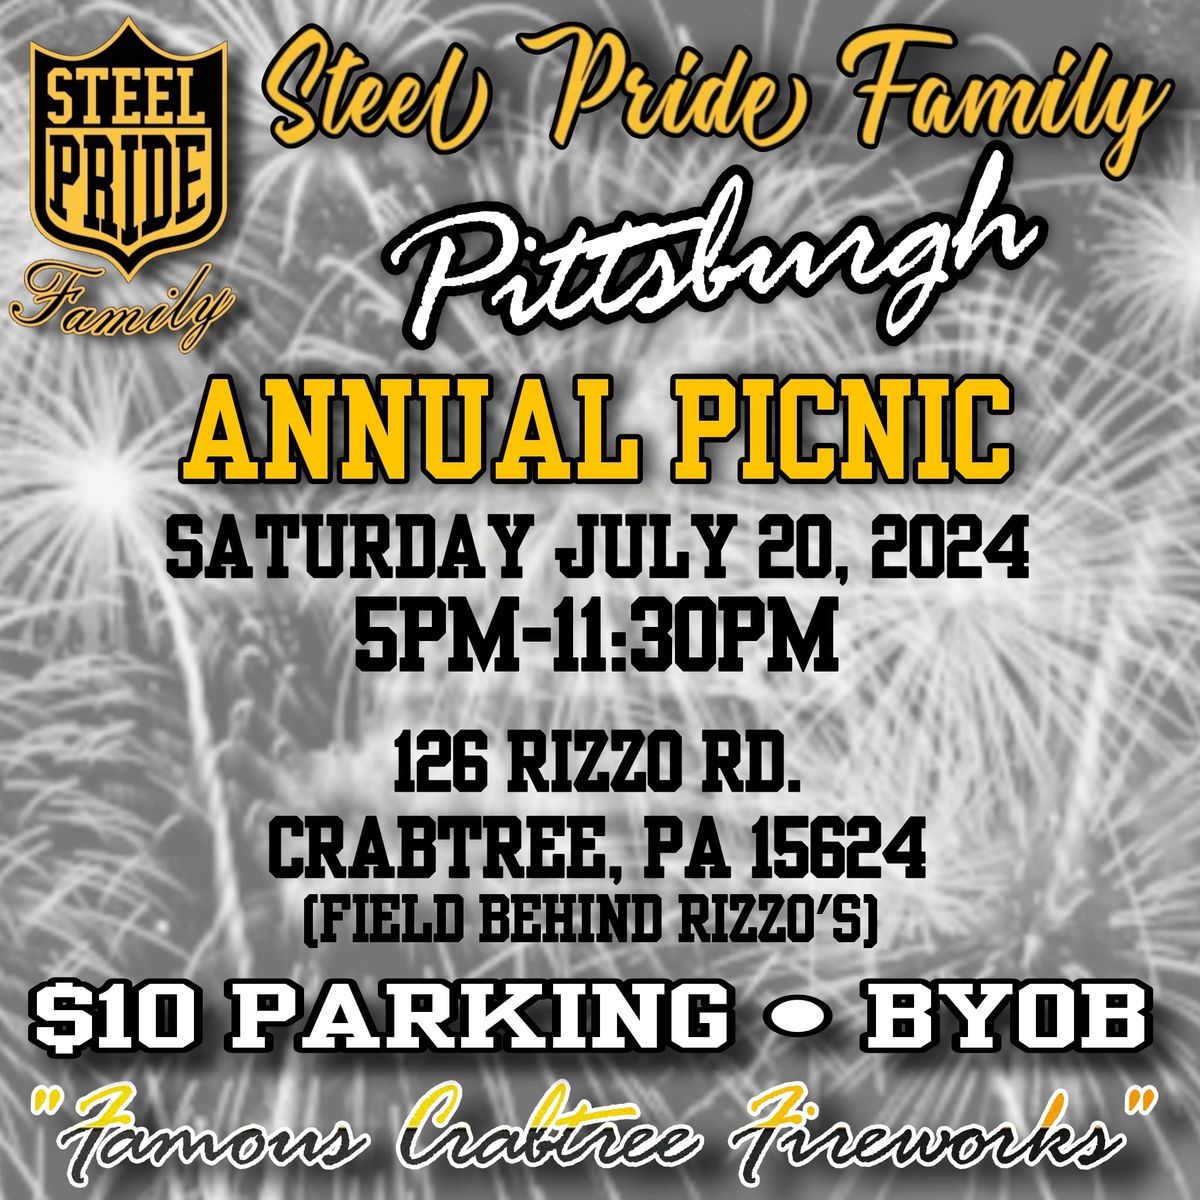 Steel Pride Family Pitt Picnic w\/fireworks